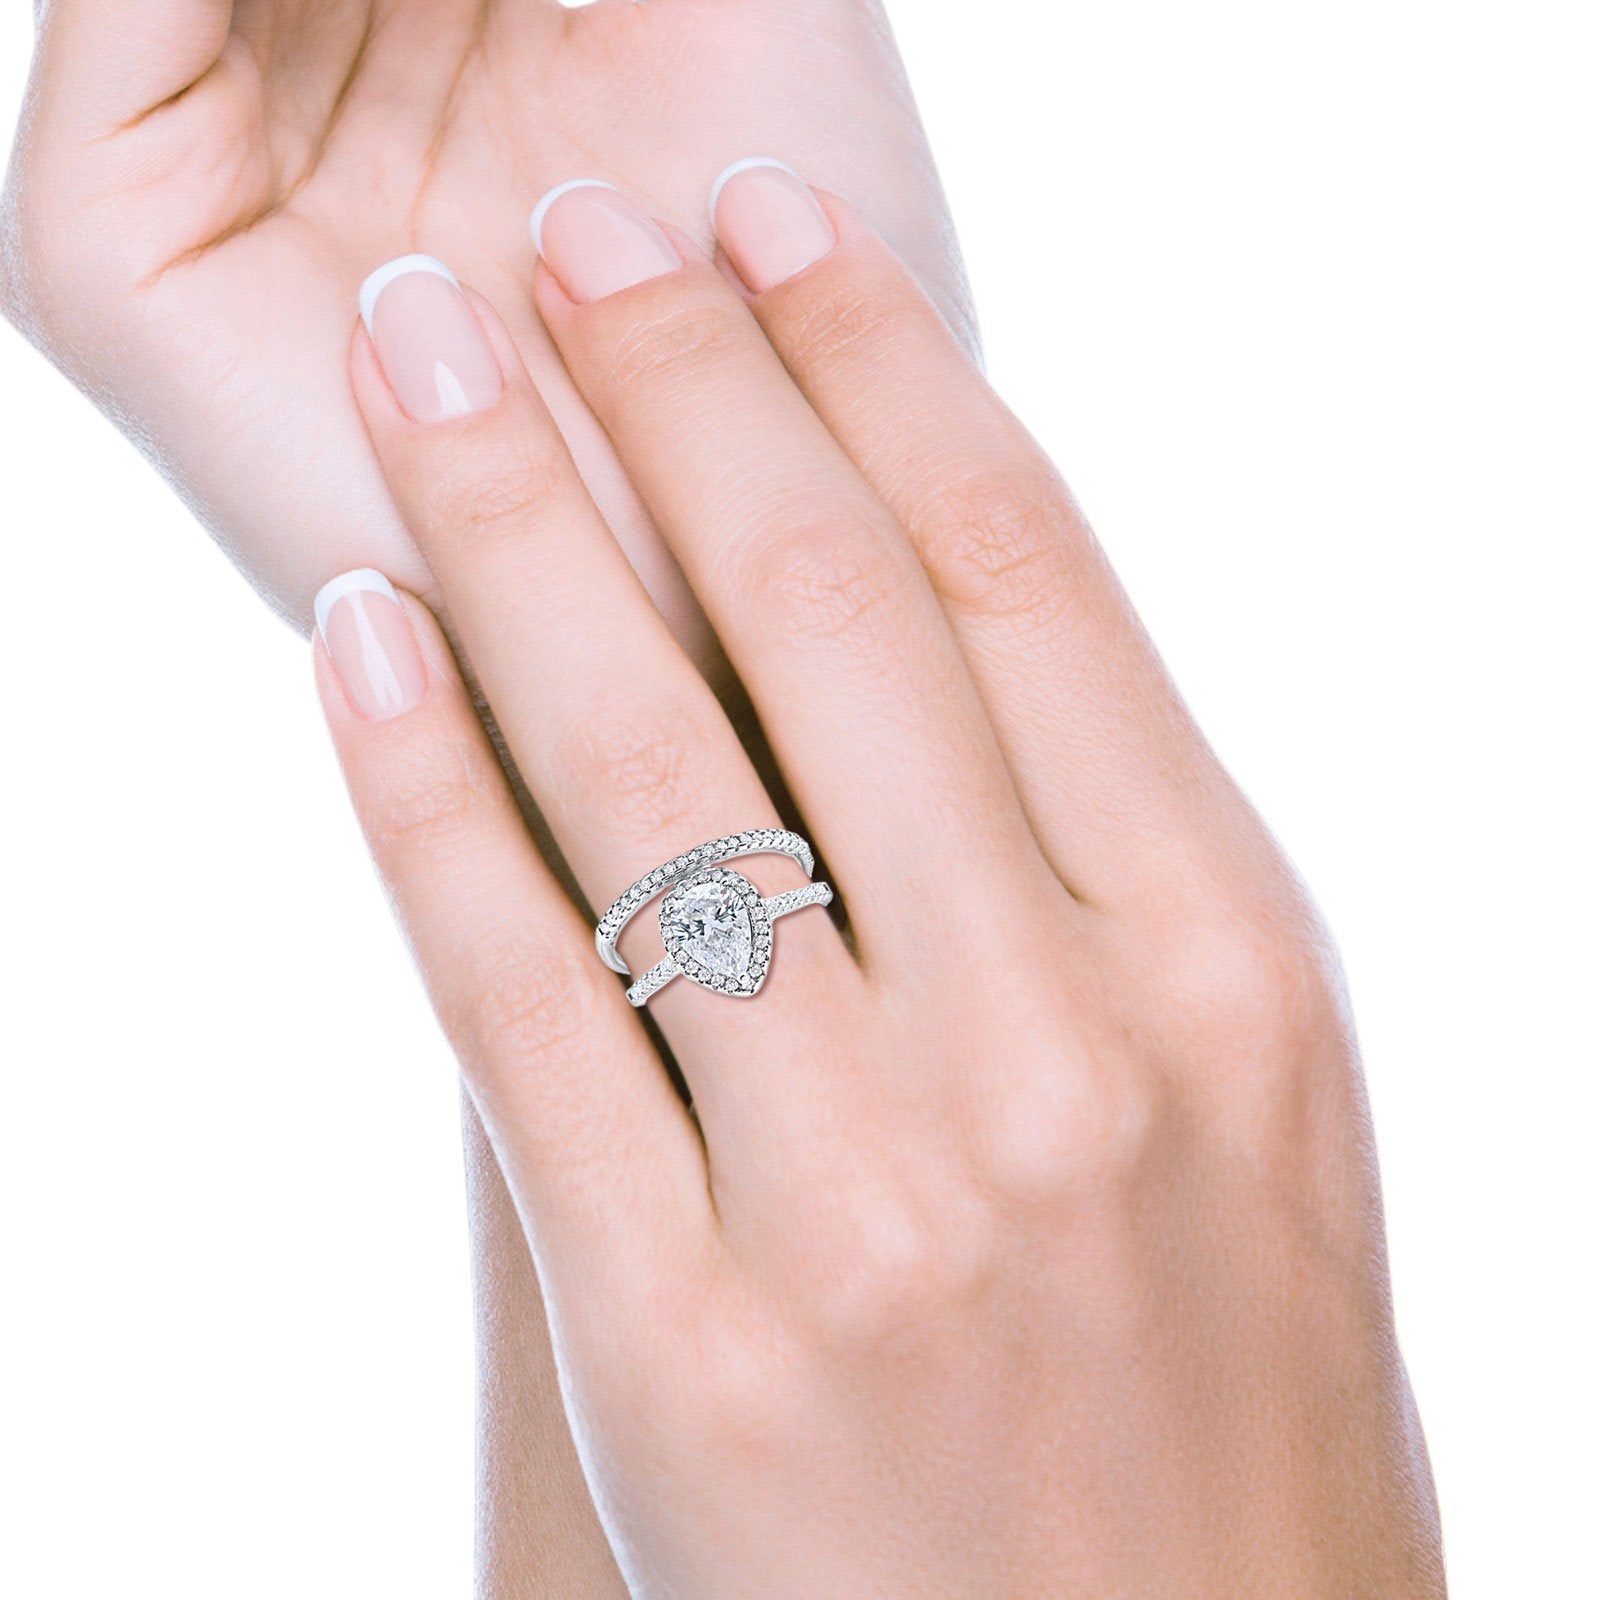 14K Gold Art Deco Teardrop Pear Shape Engagement Bridal Simulated CZ Ring